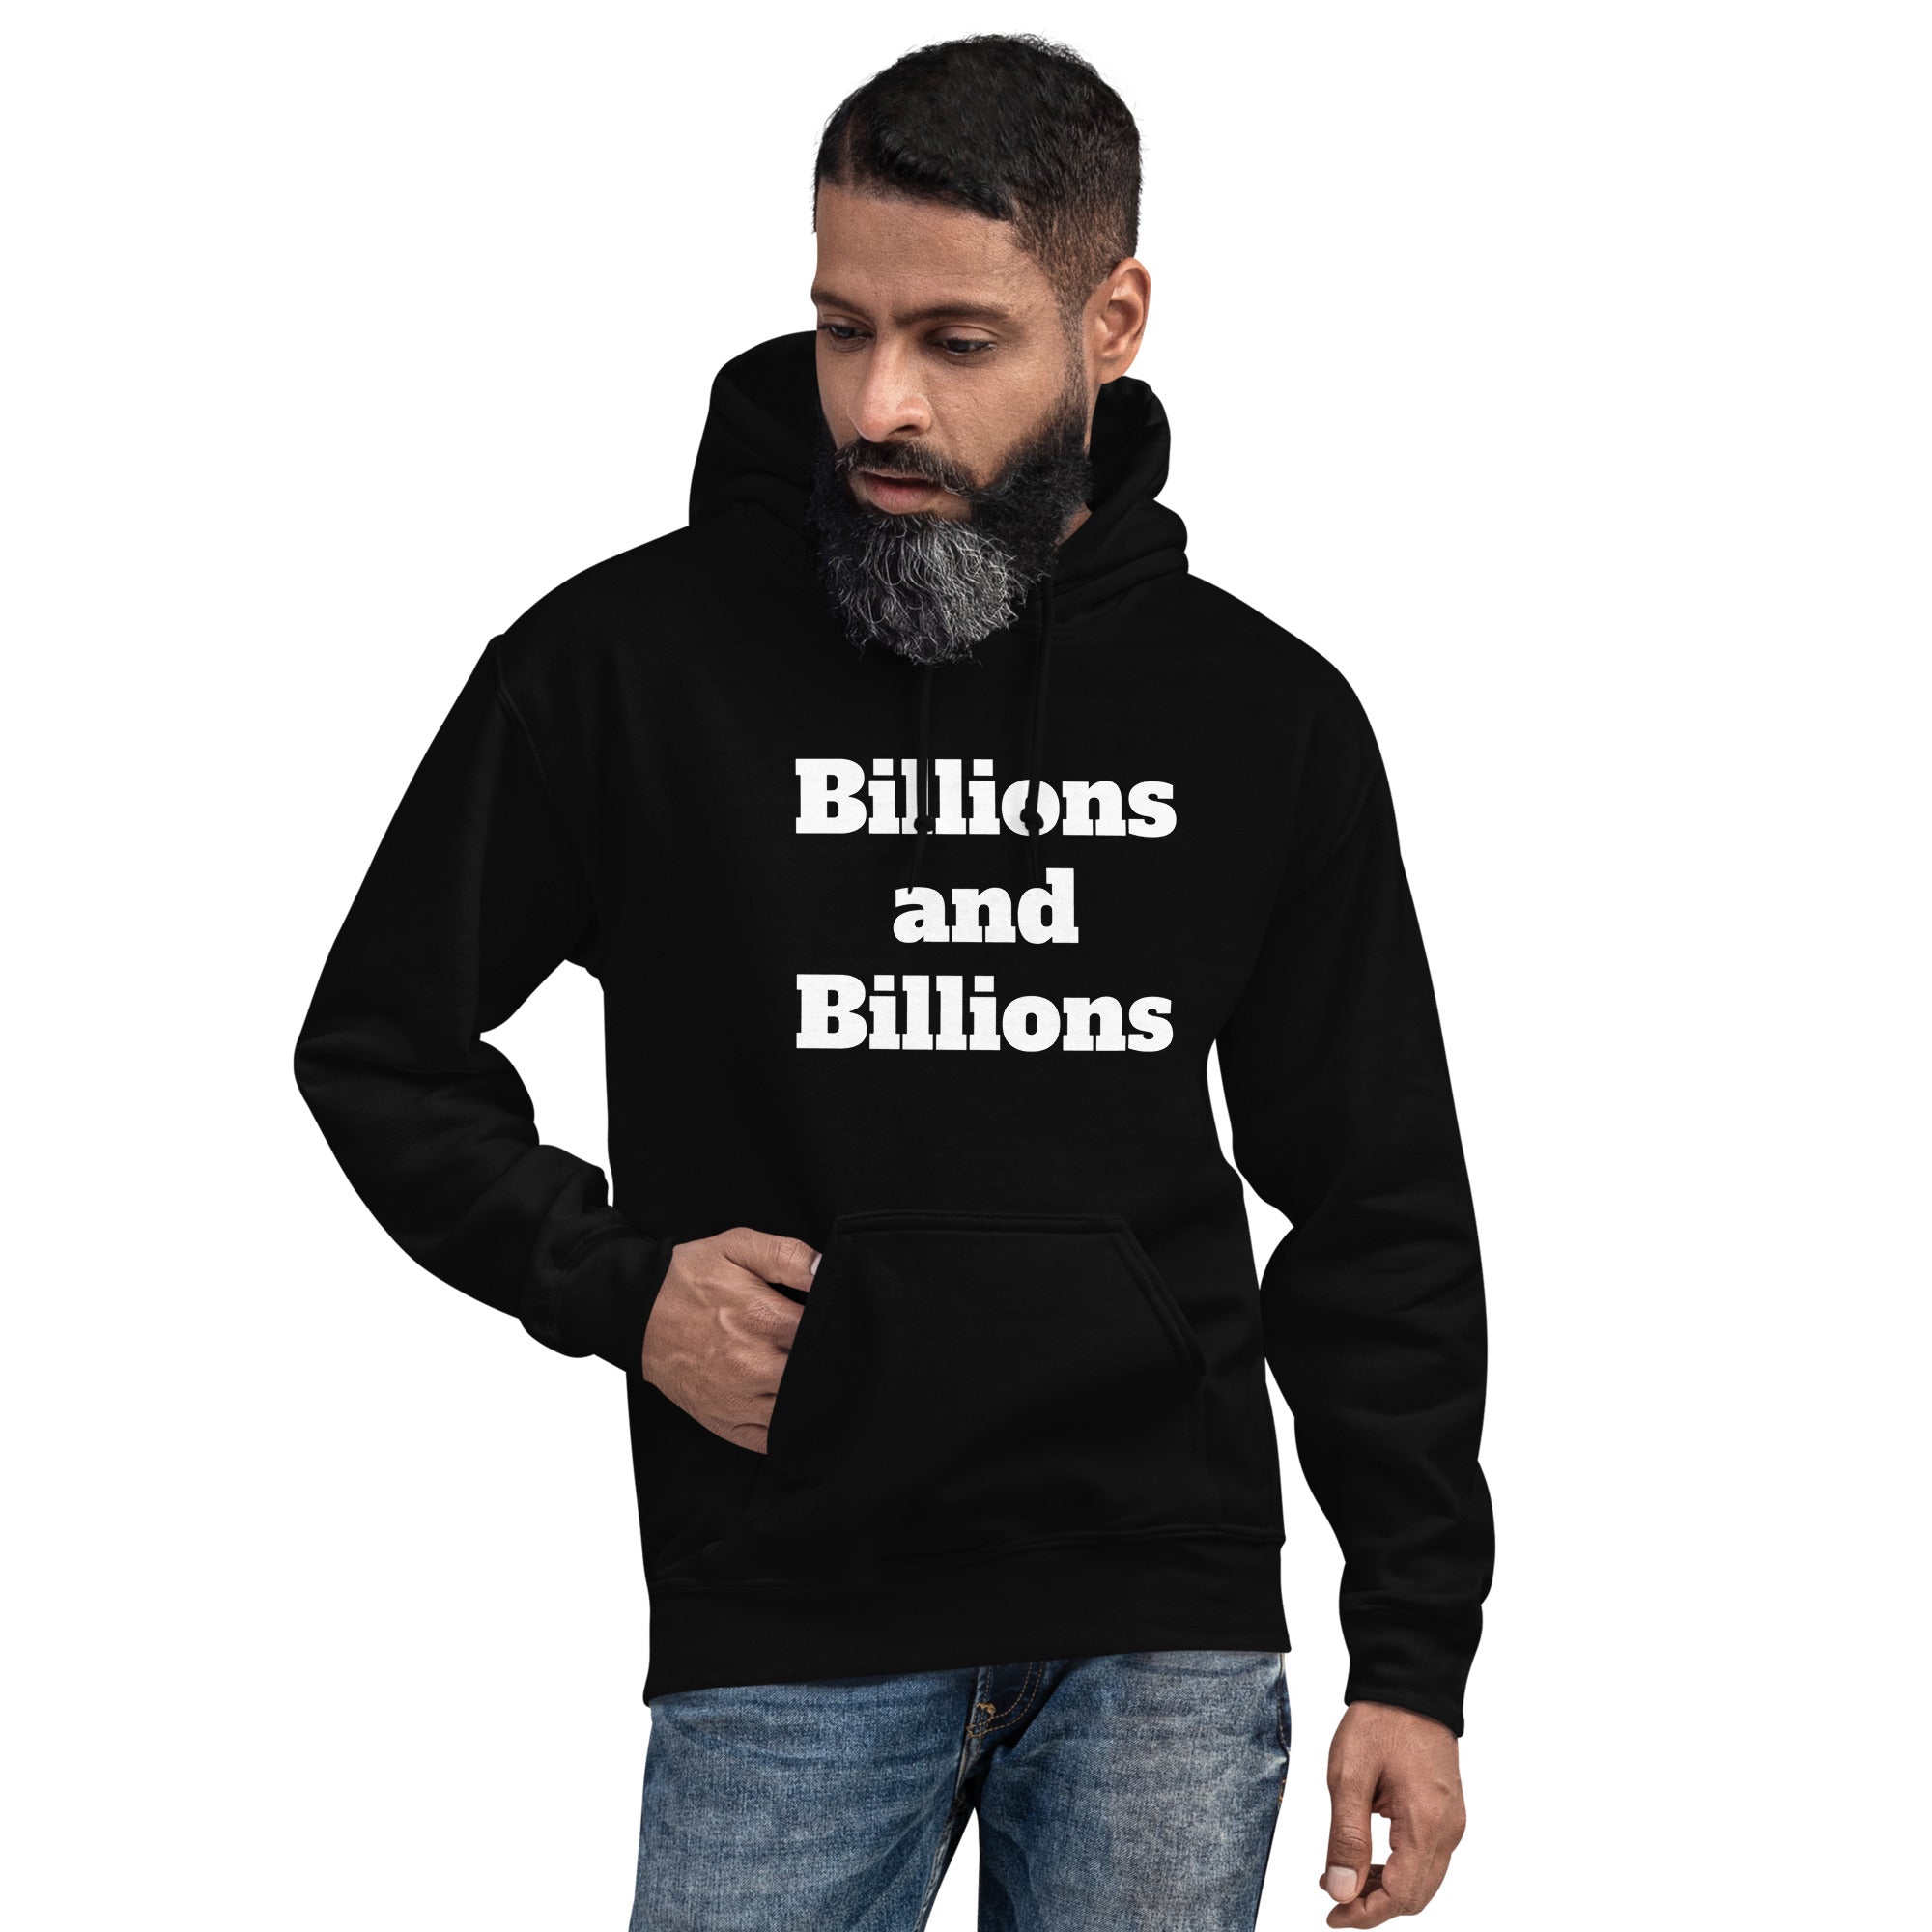 Billions Unisex Hoodie